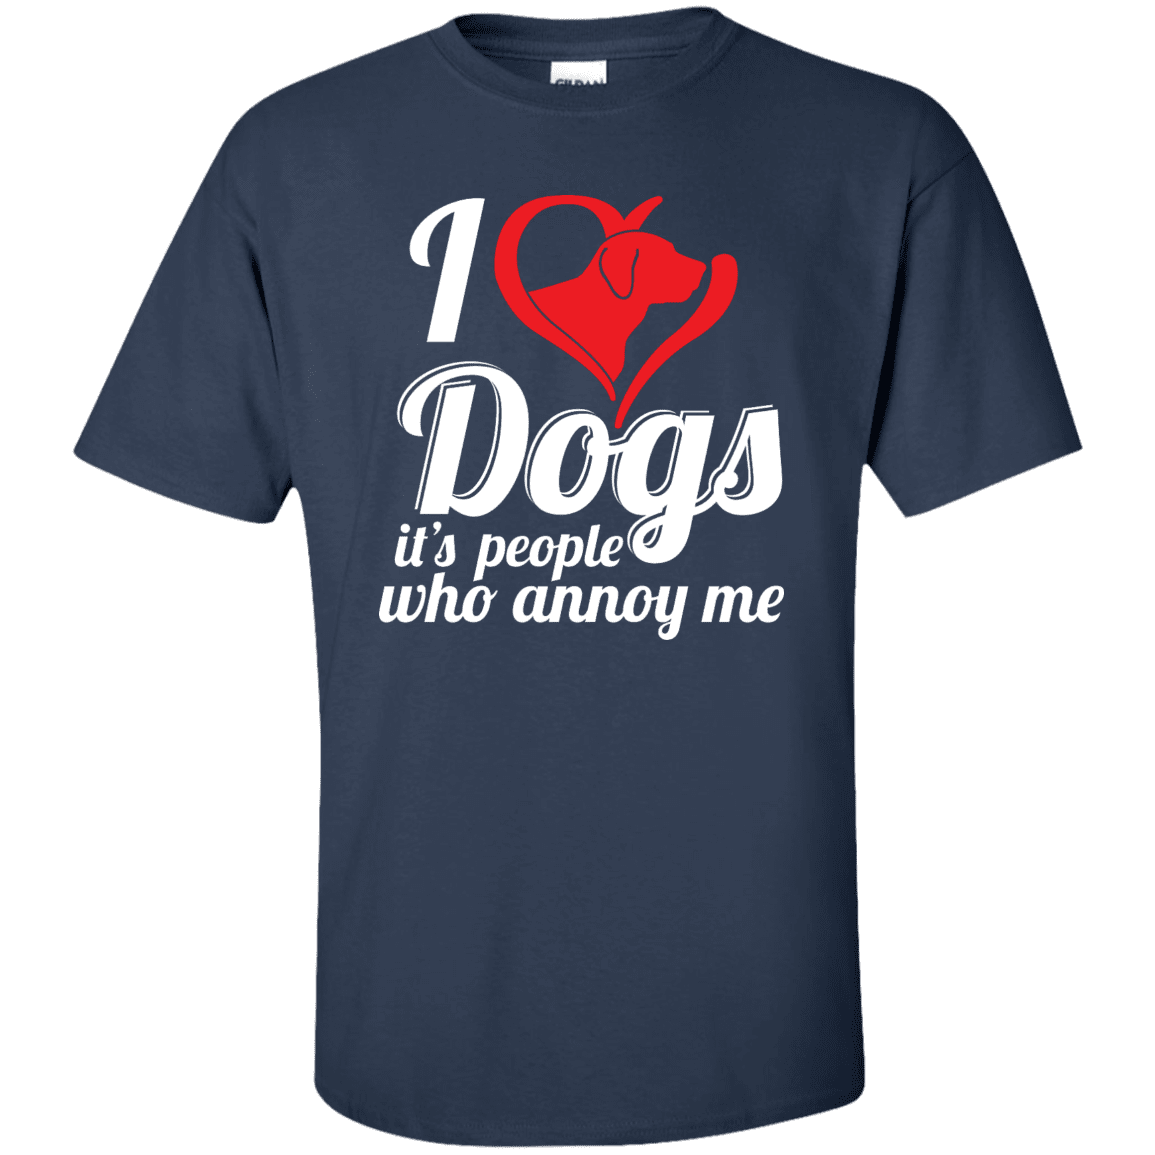 I Love Dogs - T Shirt.